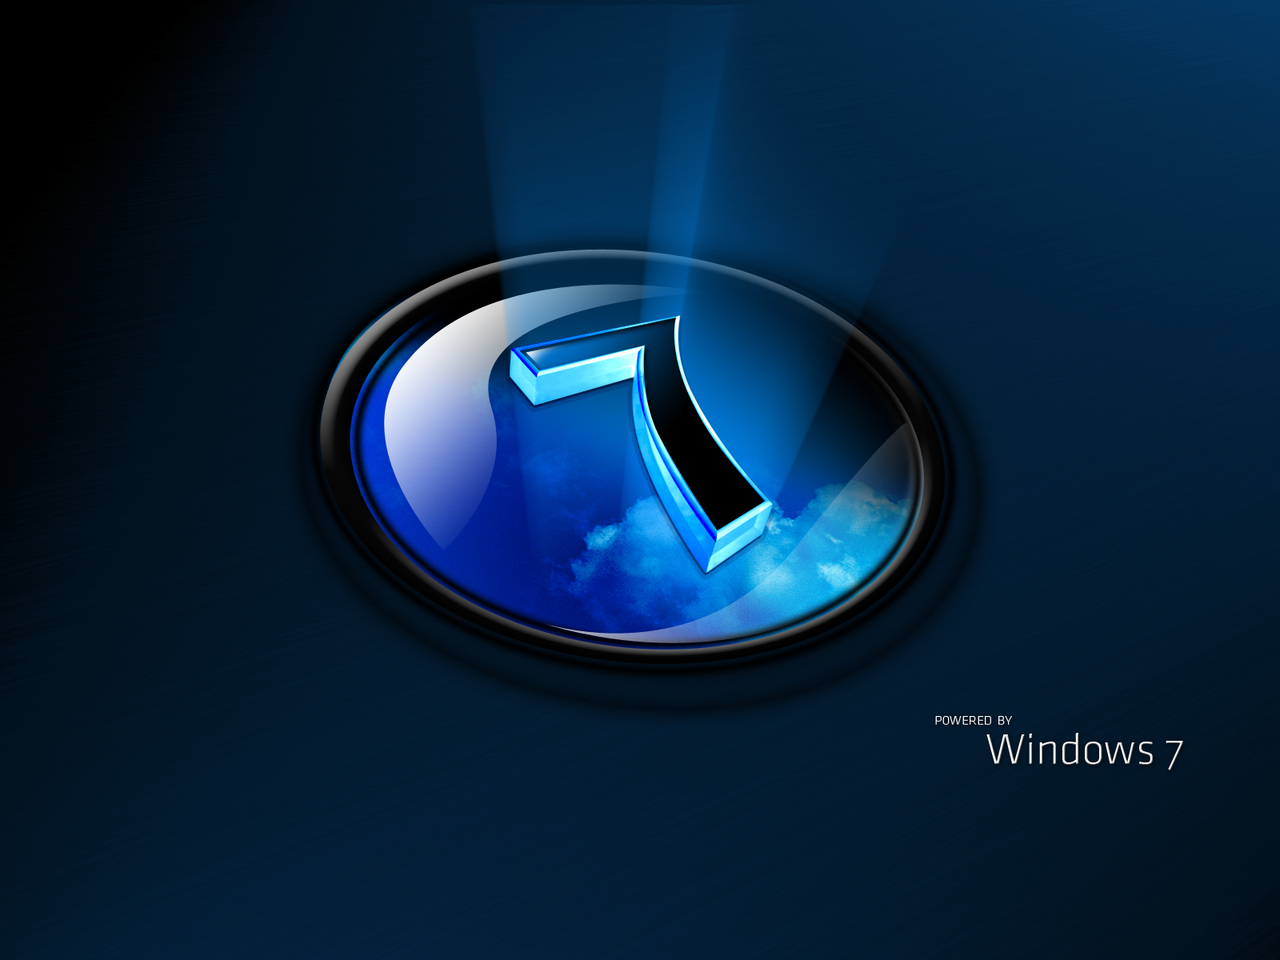 HD Wallpaper For Windows Live Desktop